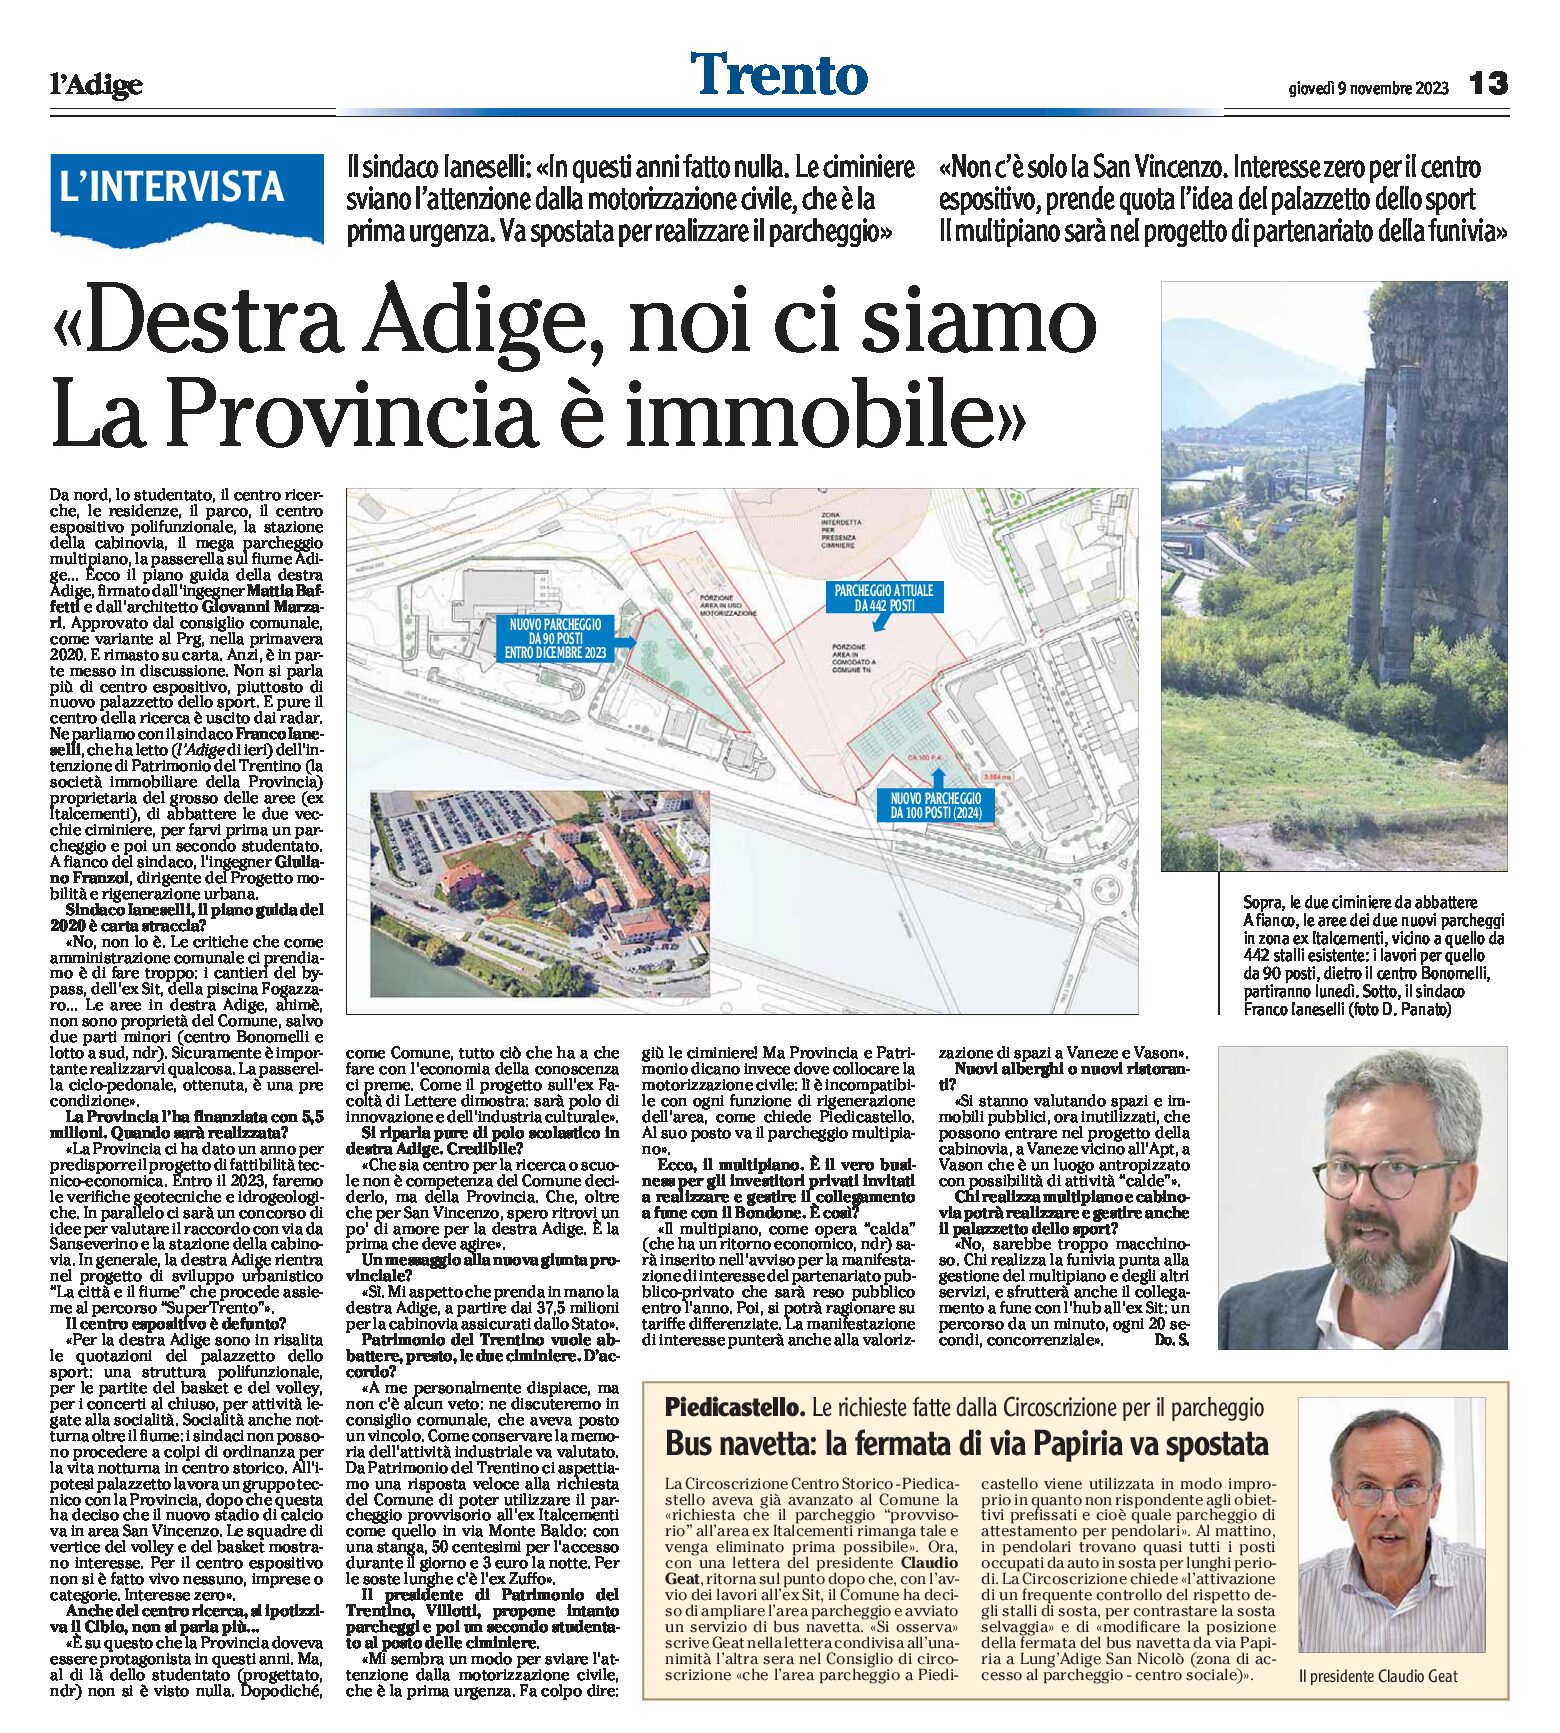 Trento, Destra Adige: intervista al sindaco Ianeselli